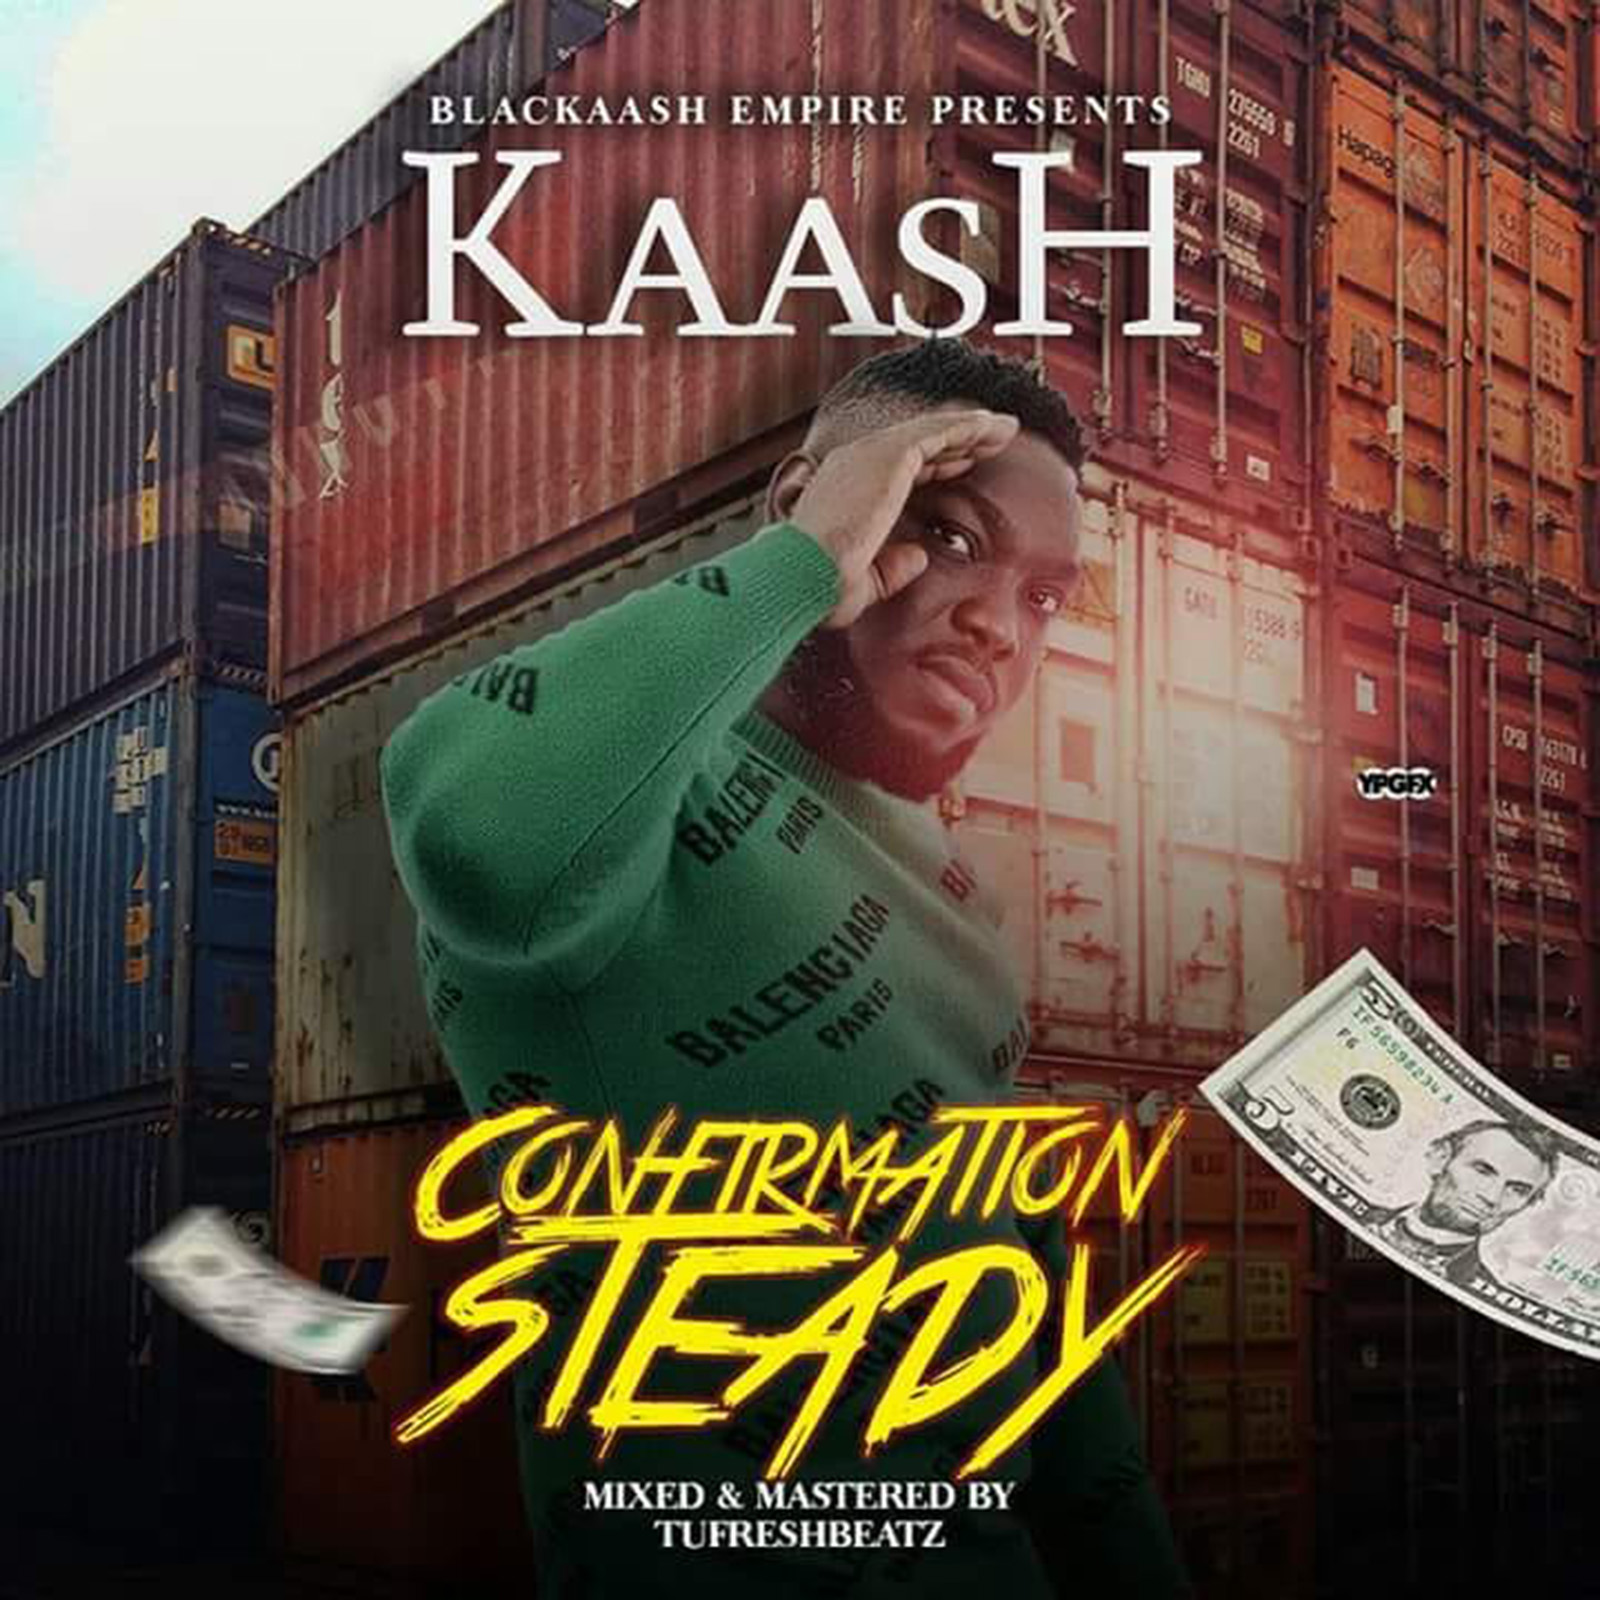 Confirmation Steady by Kaash